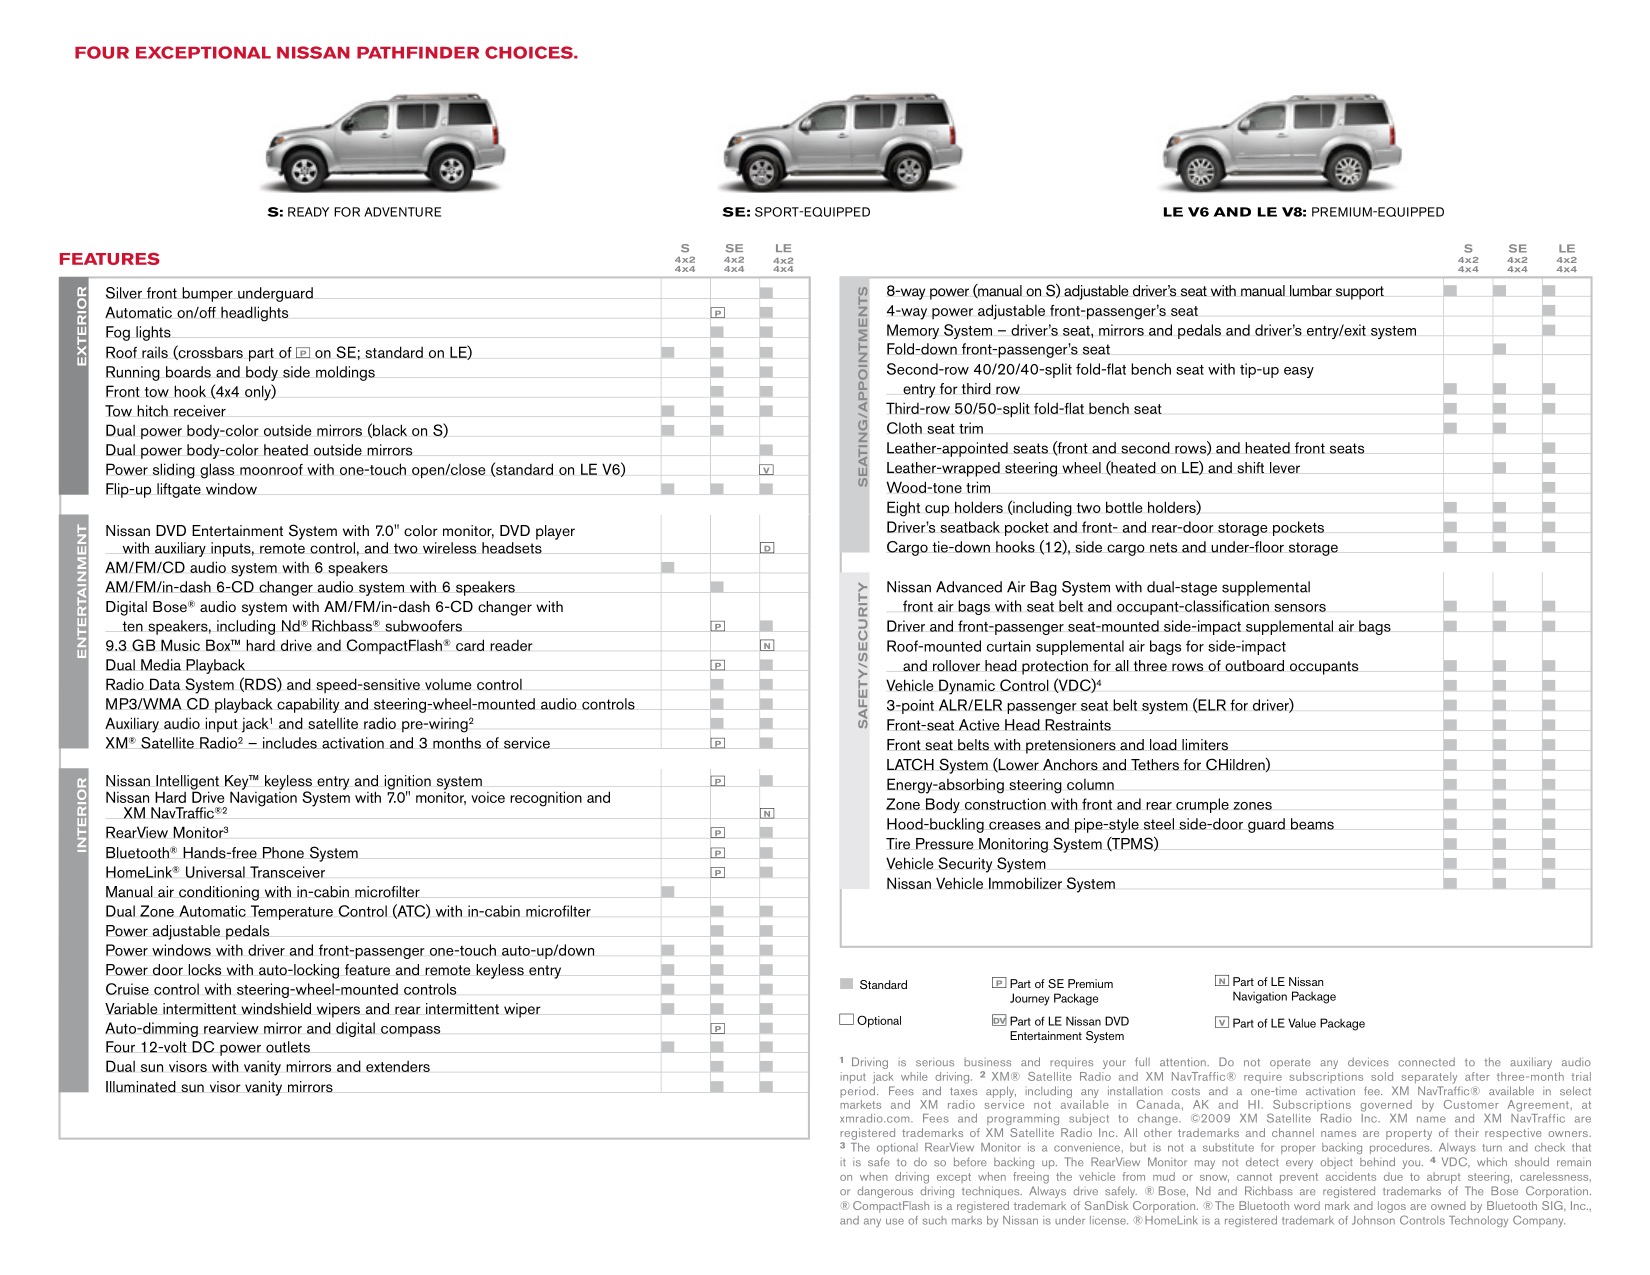 2010 Nissan Pathfinder Brochure Page 2